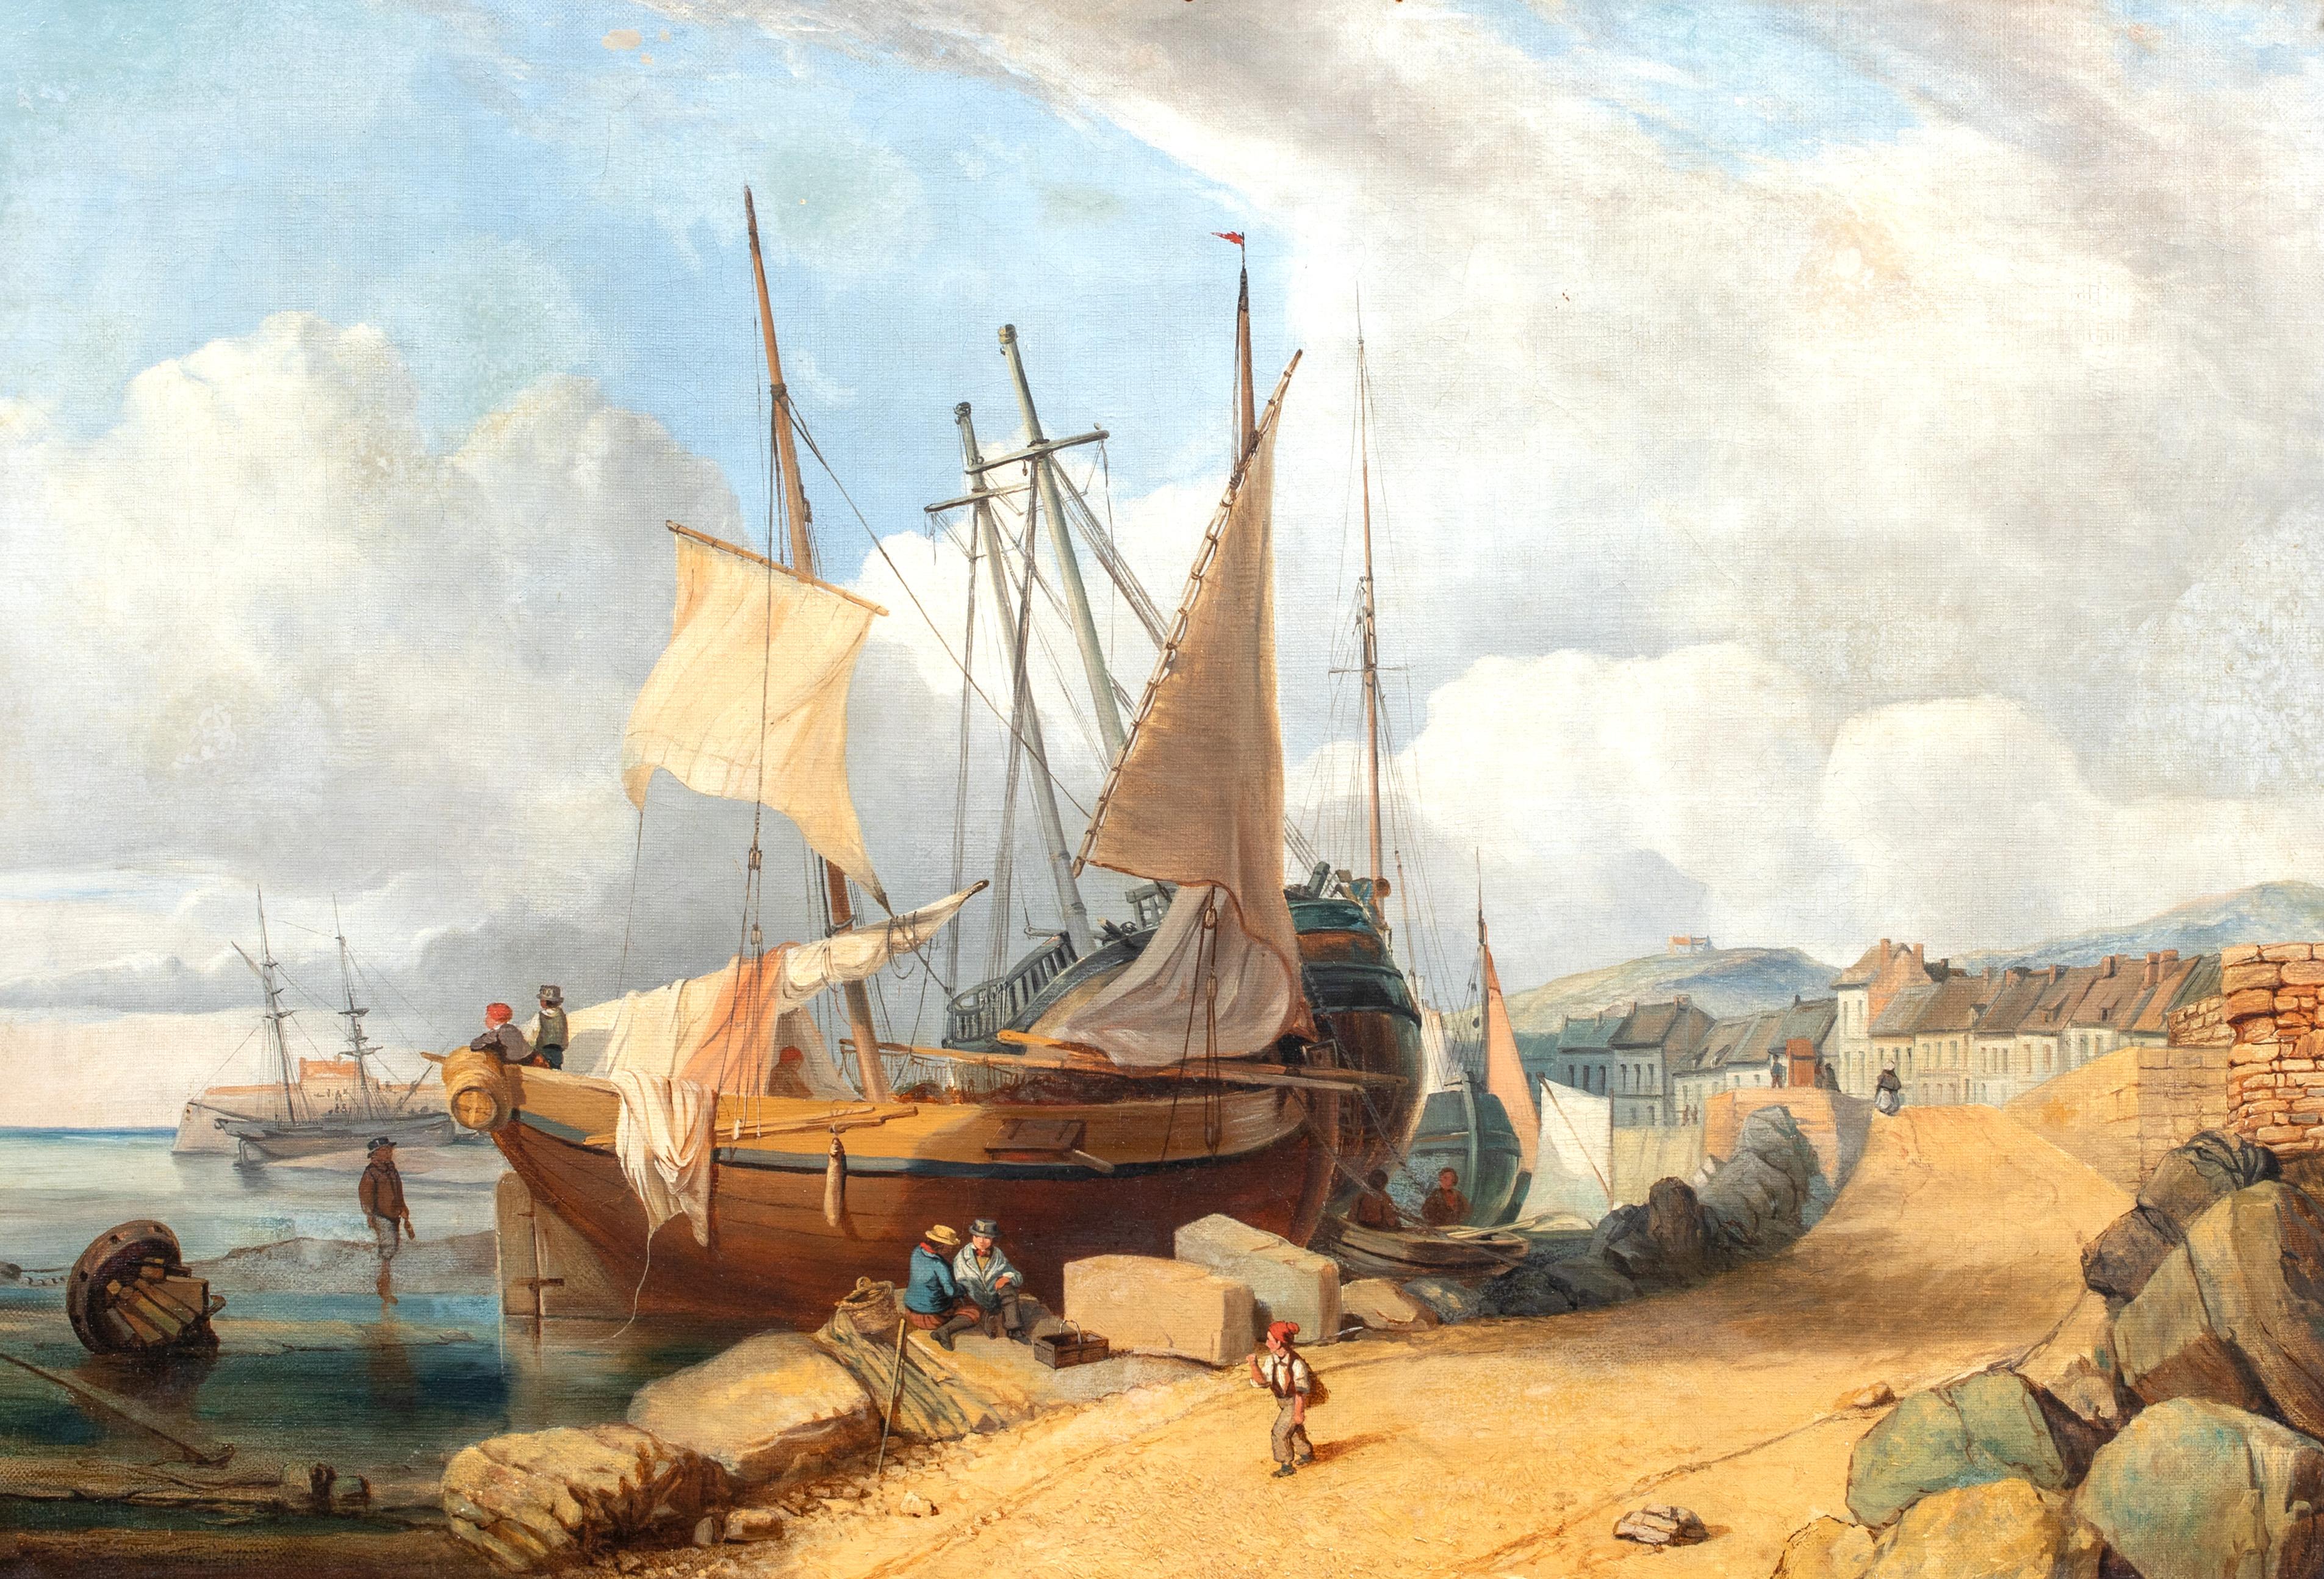 19th century ships